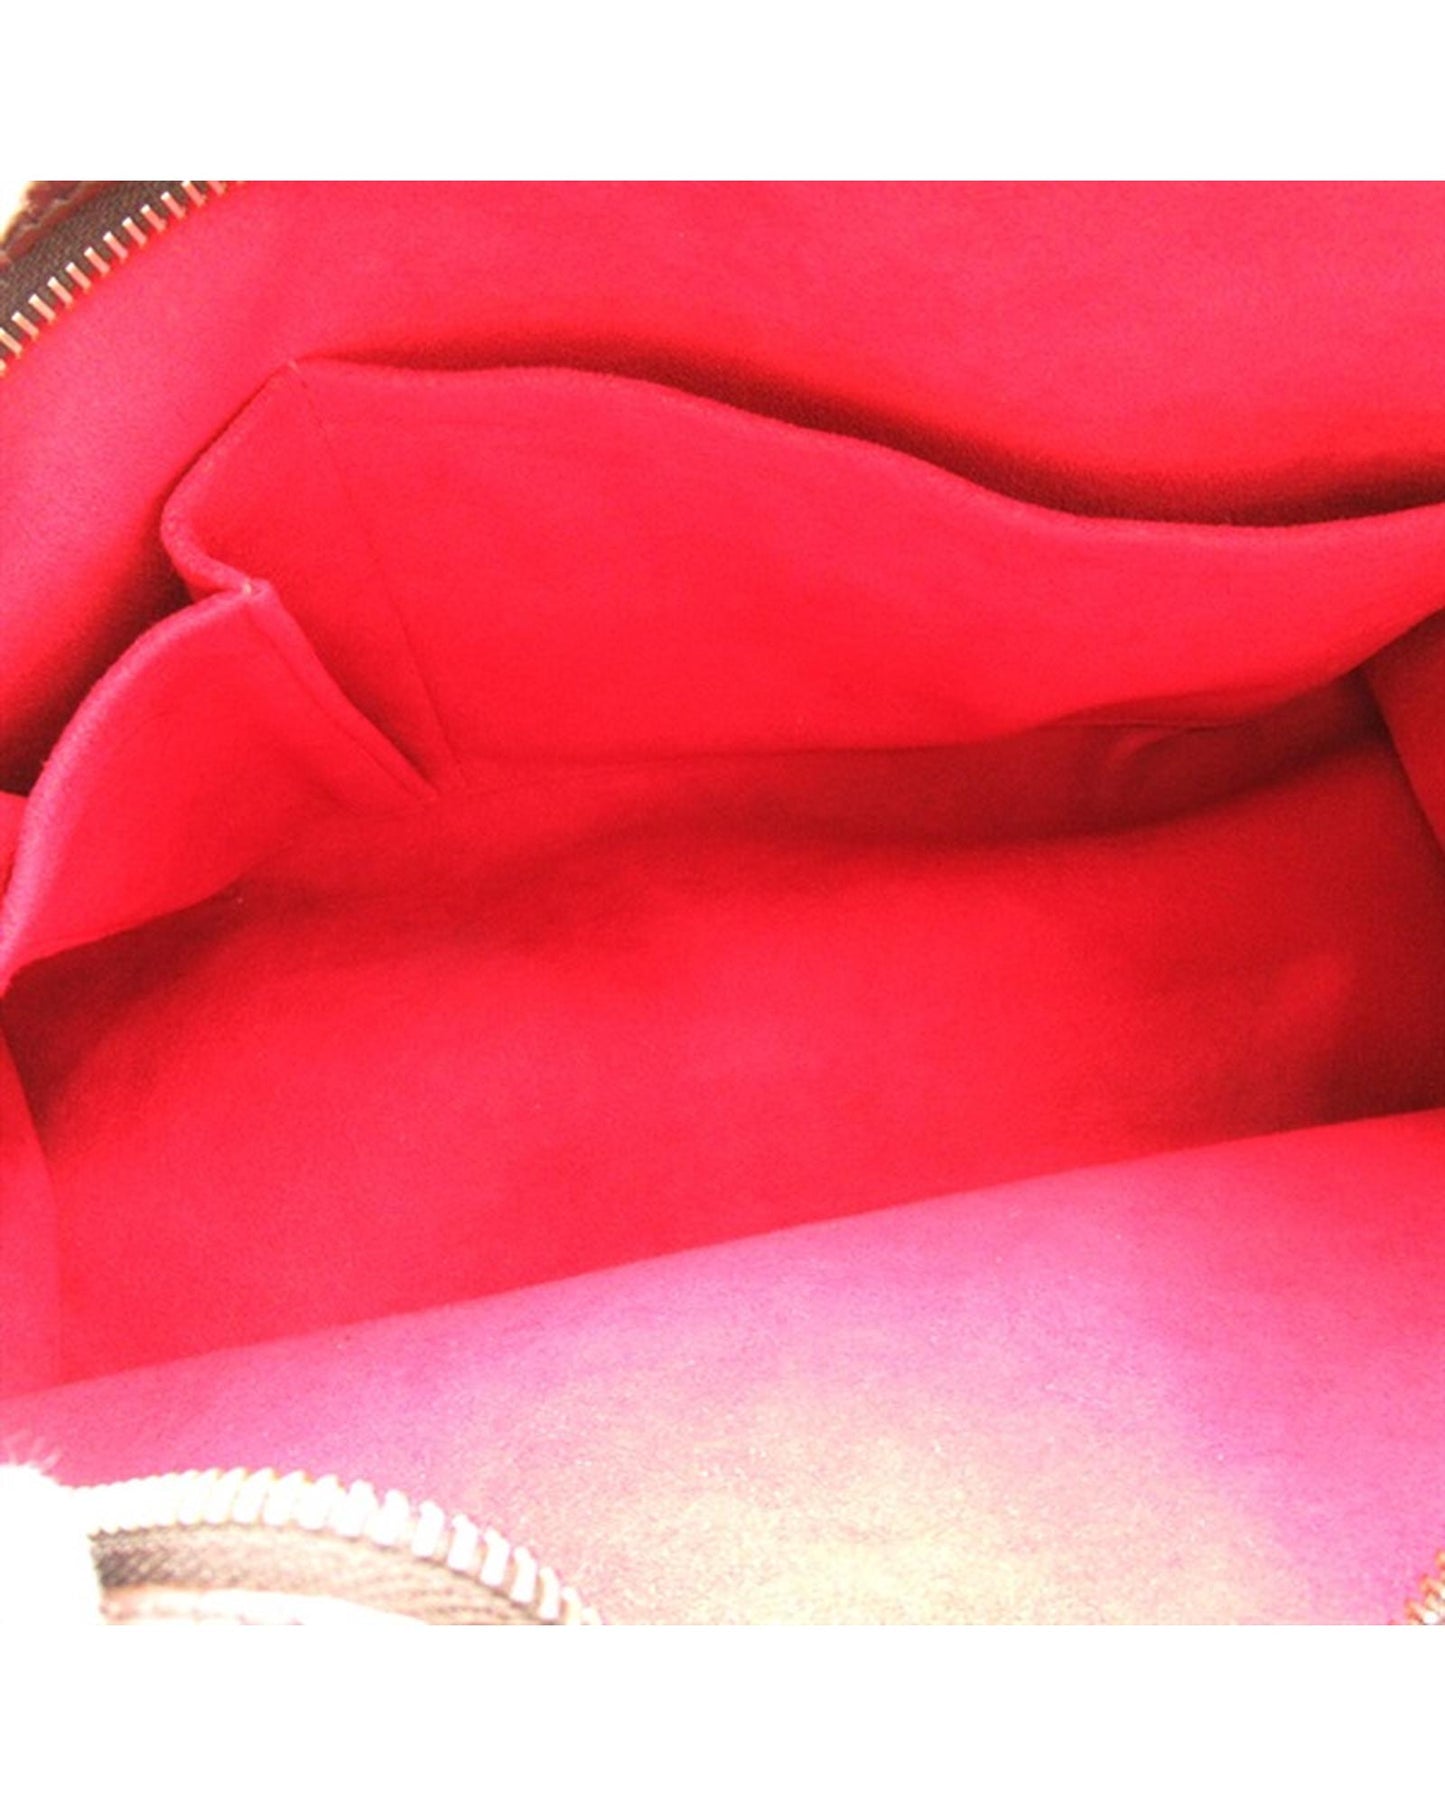 Louis Vuitton Women's Damier Ebene Duomo Bag in Excellent Condition in Brown